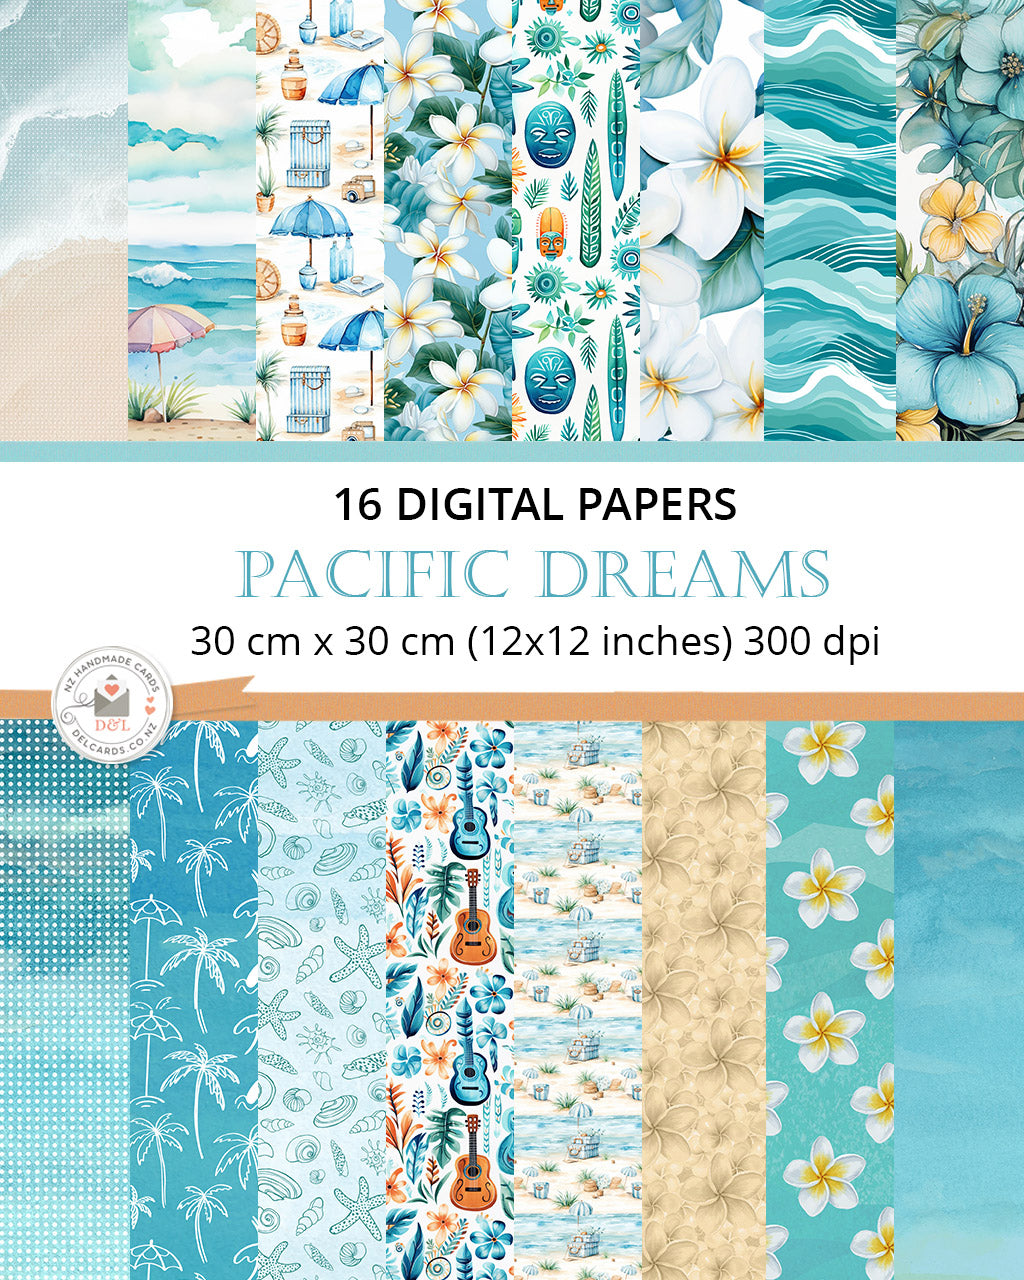 16 Digital Papers - Pacific Dreams